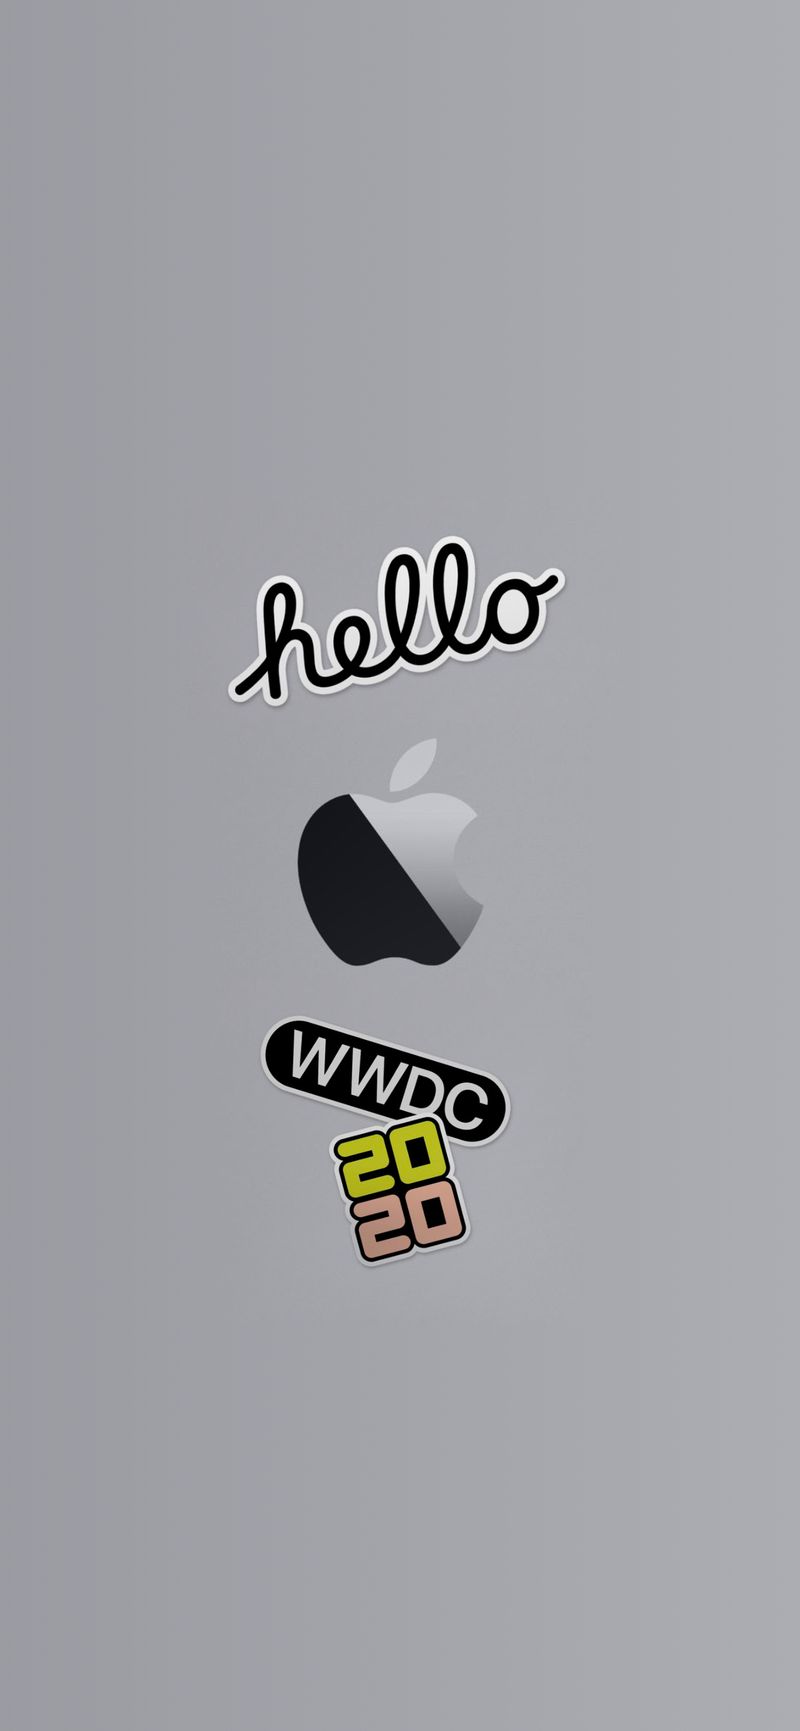 wwdc 2020 Hintergrundbild iPhone AR72014 idownloadblog Logos laden grau ein